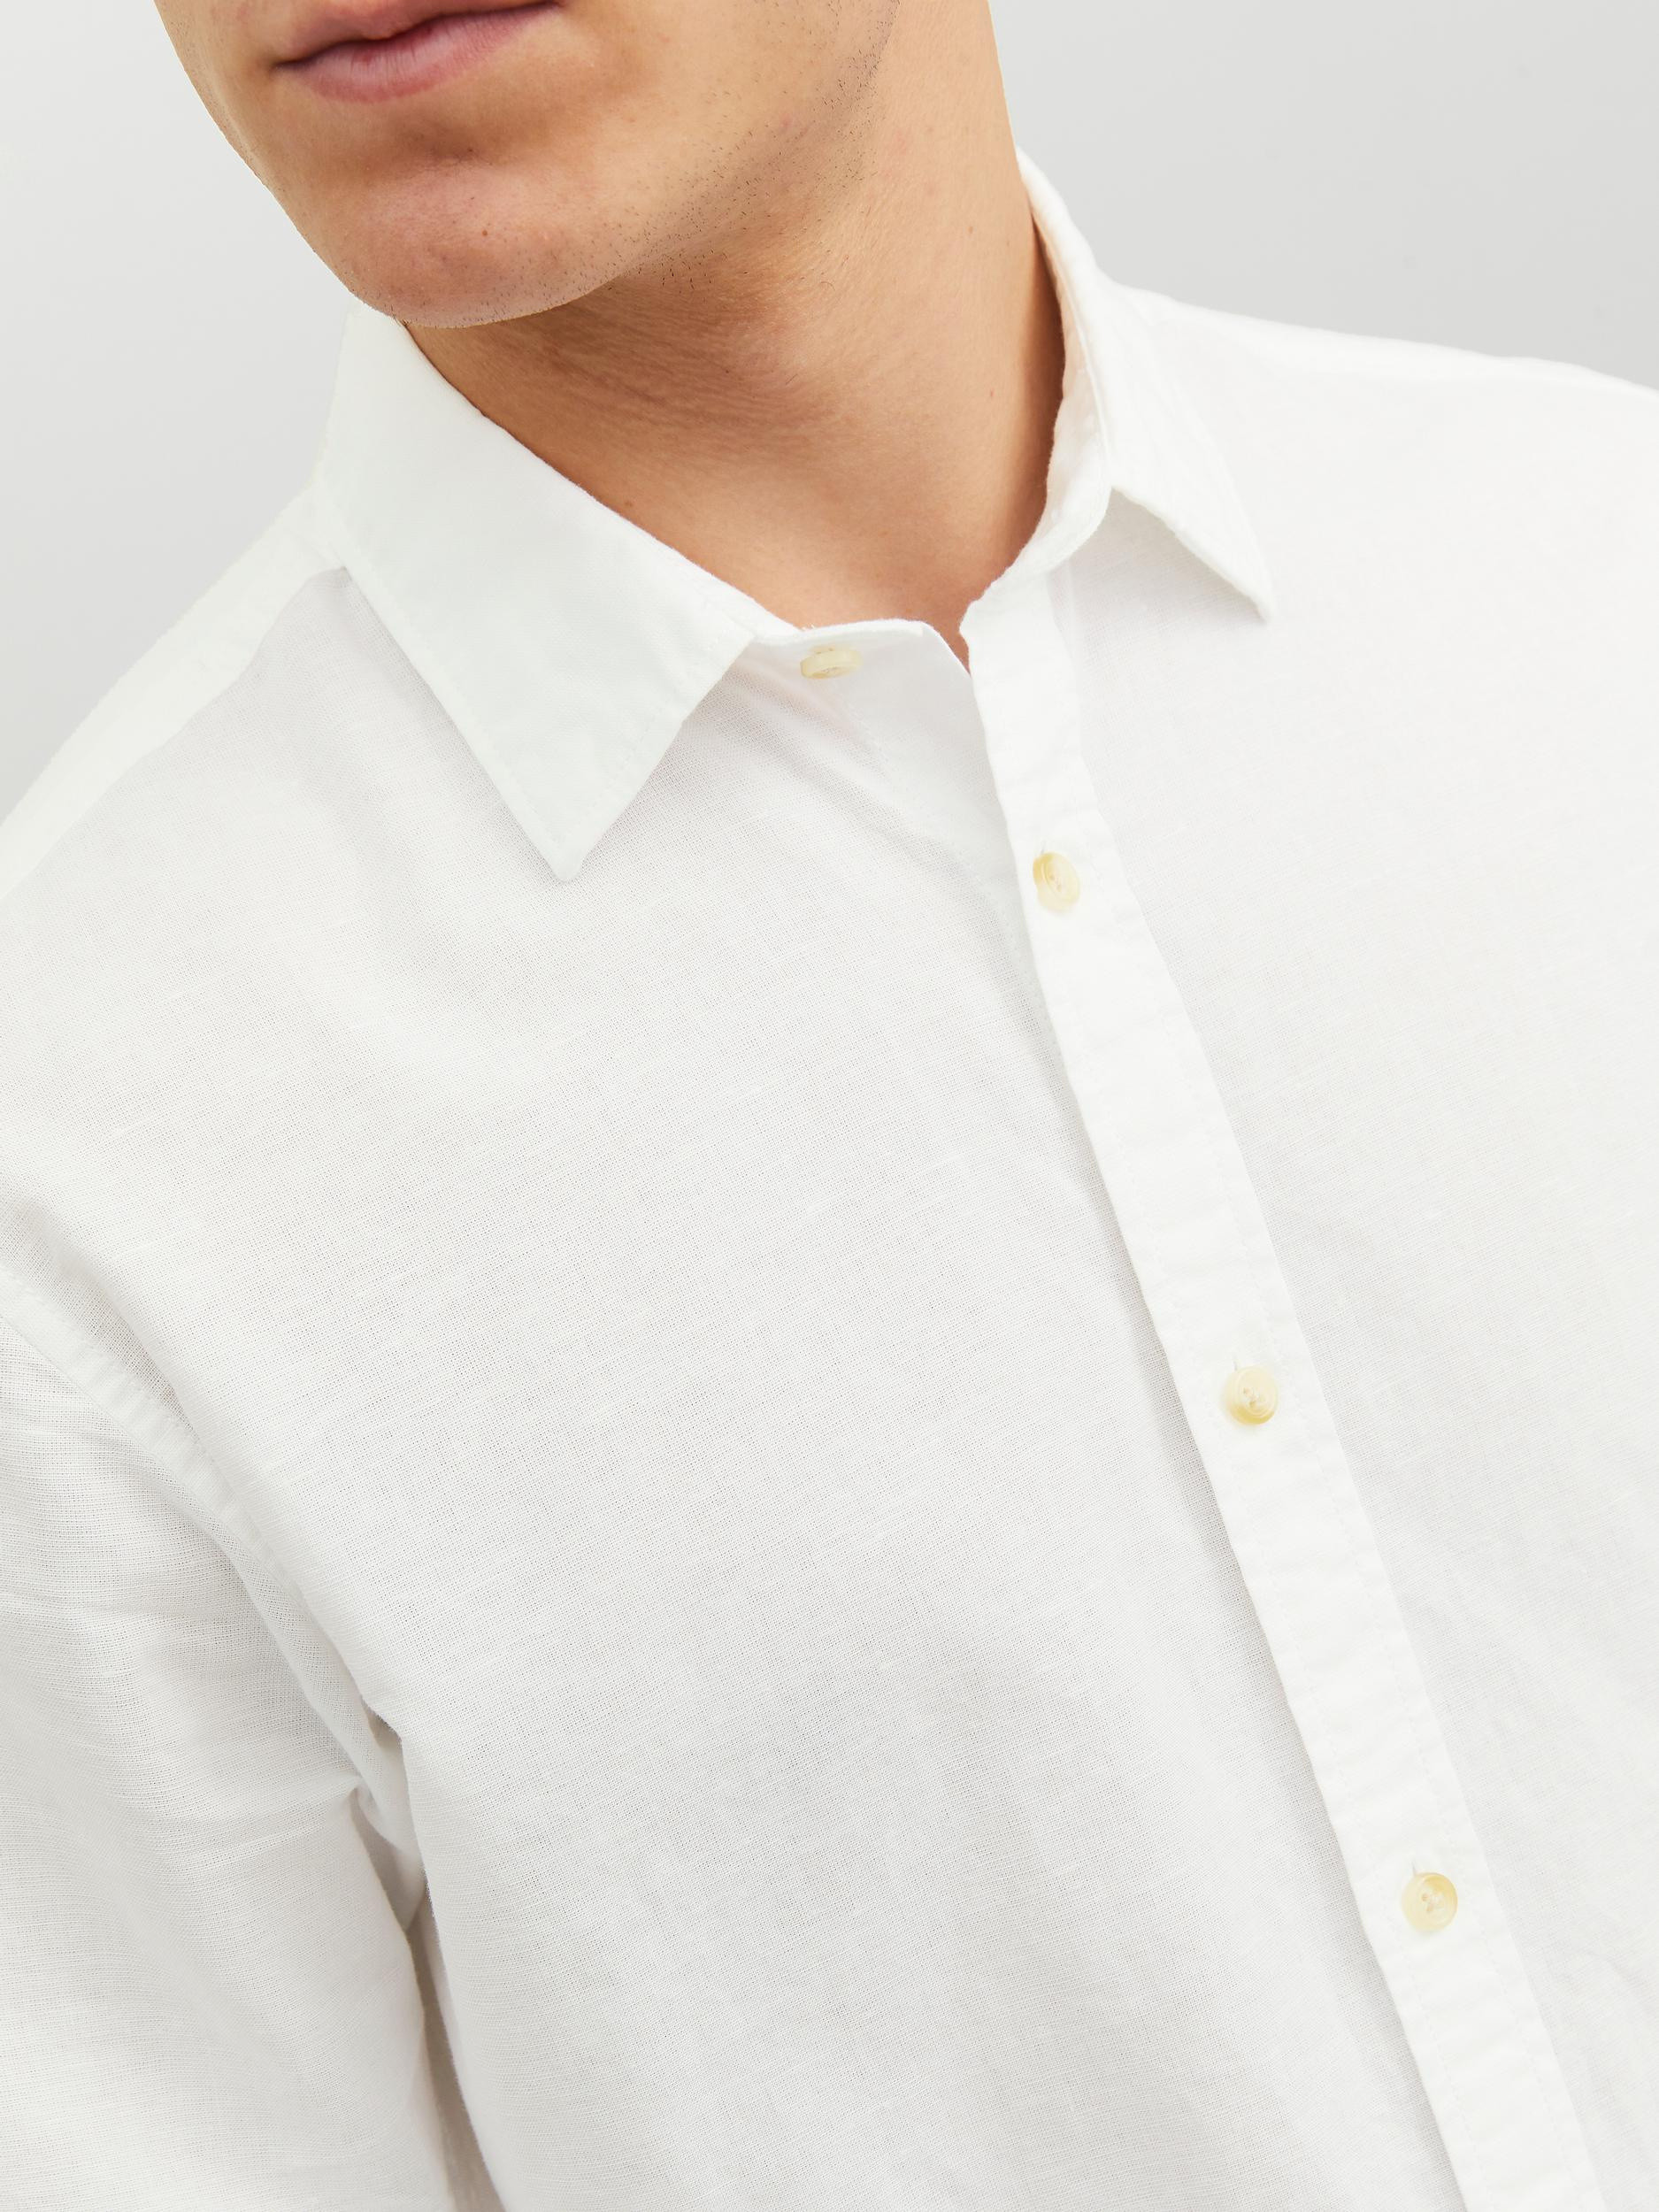 Jack & Jones - Slim fit shirt, White, large image number 6